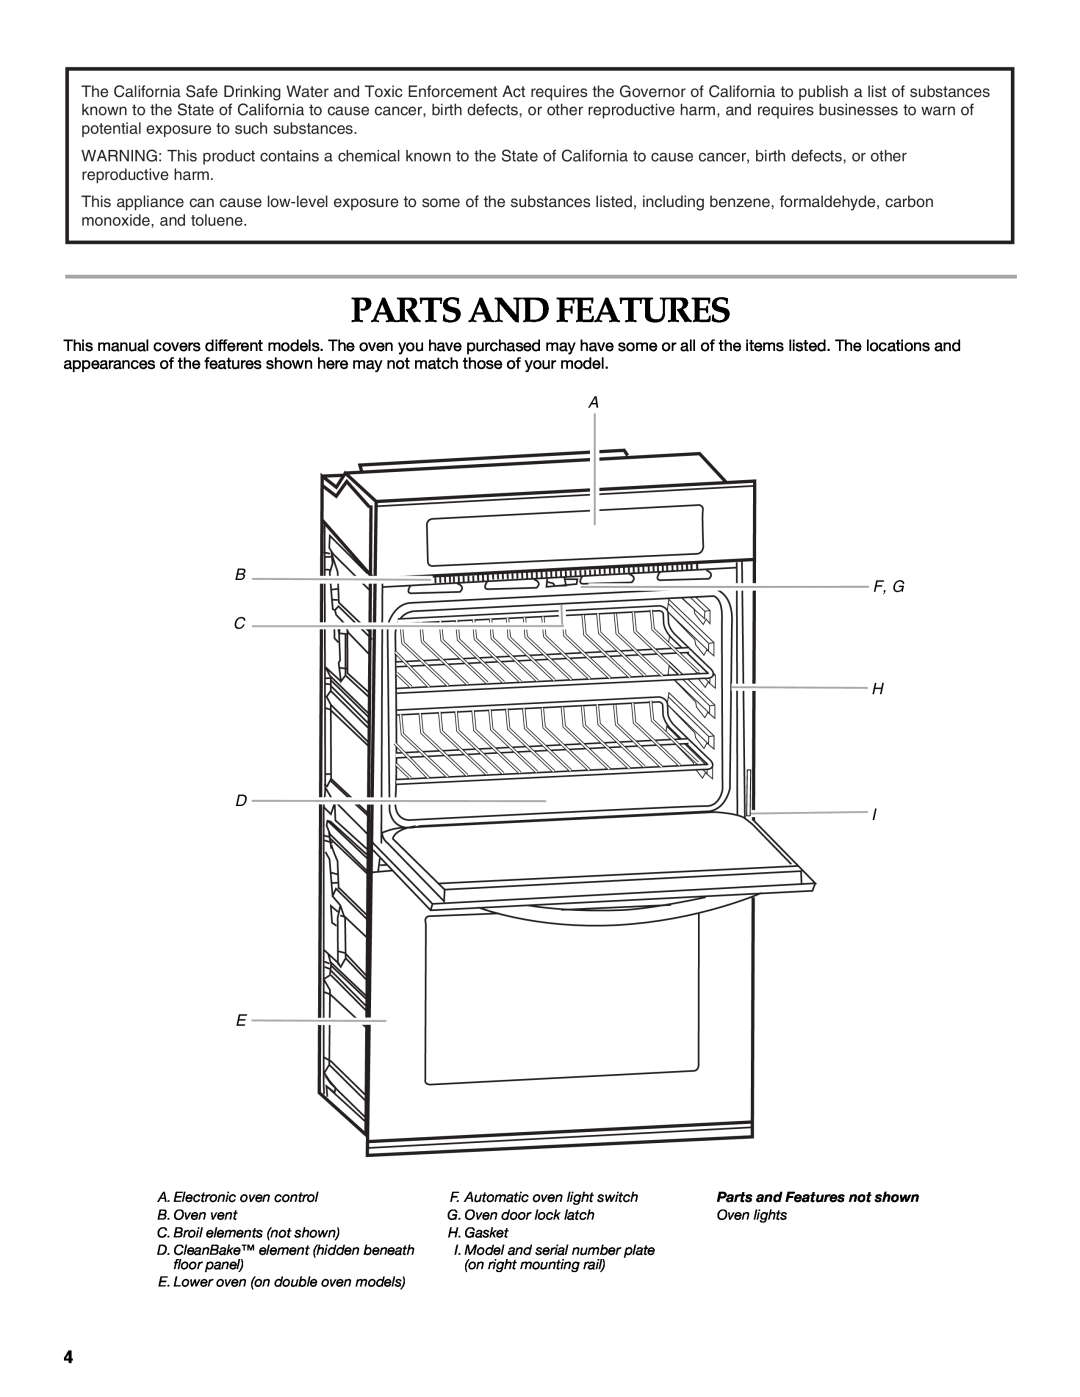 KitchenAid KEBK171 manual Parts And Features, A B F, G C H D I E 